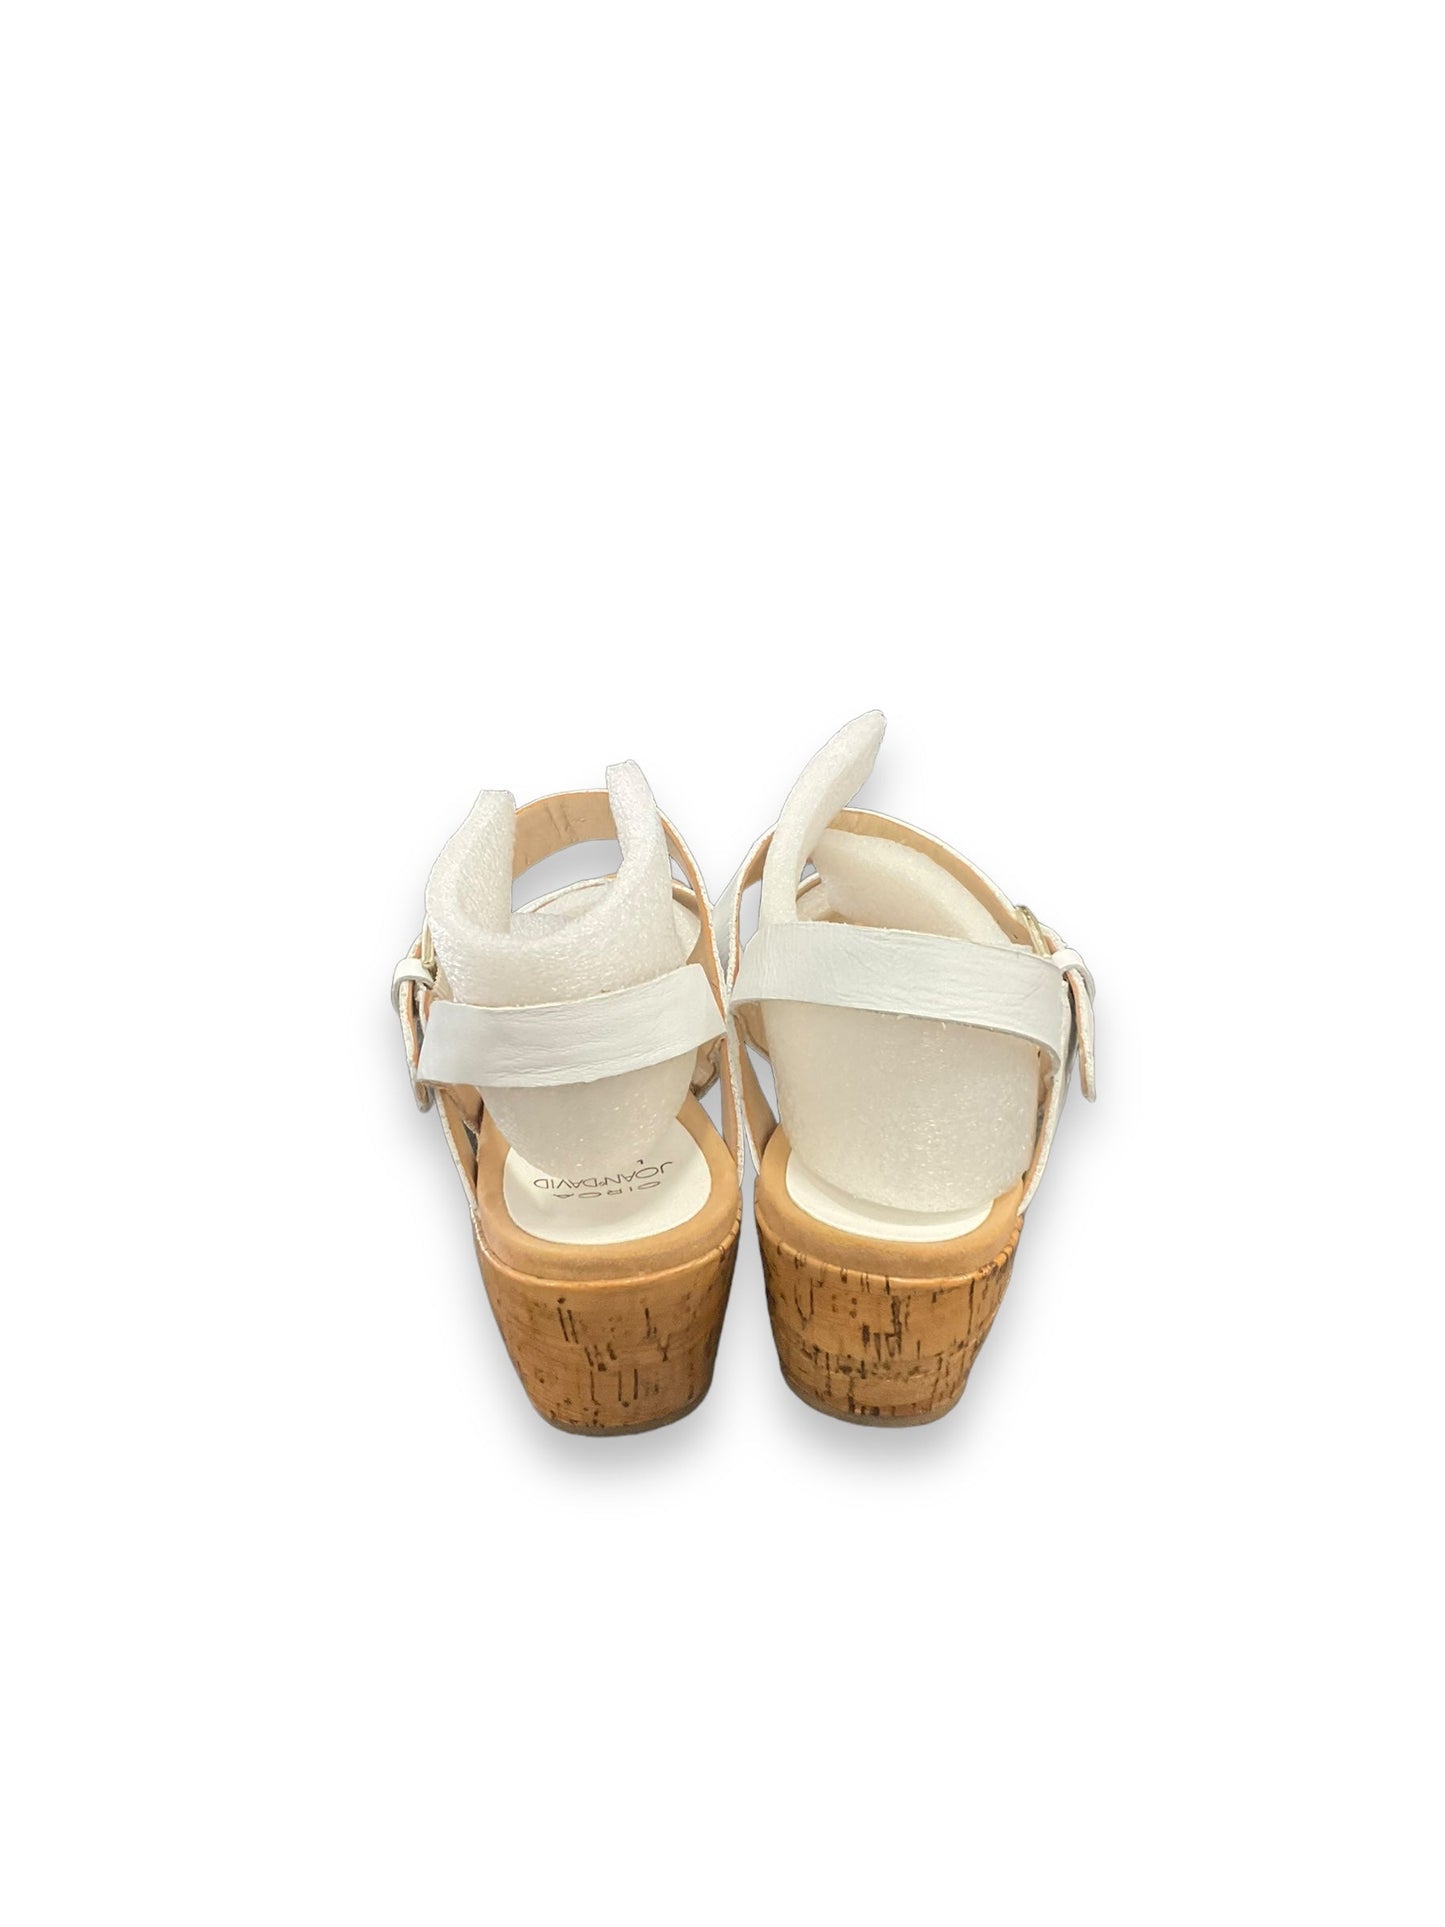 White Sandals Heels Wedge Circa Joan And David, Size 8